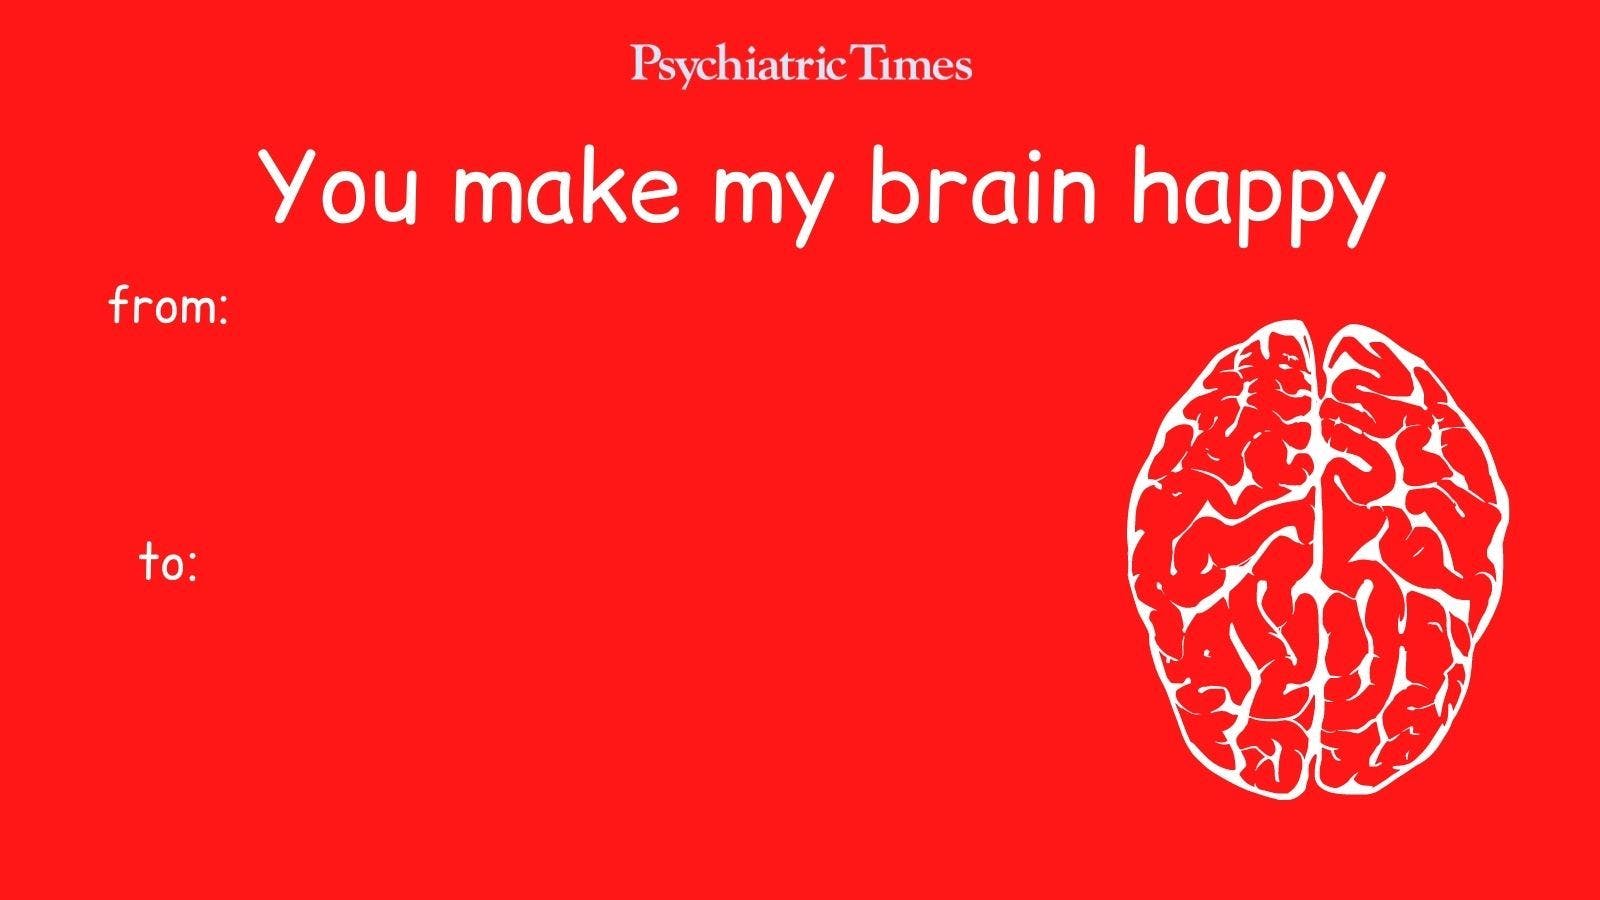 You make my brain happy